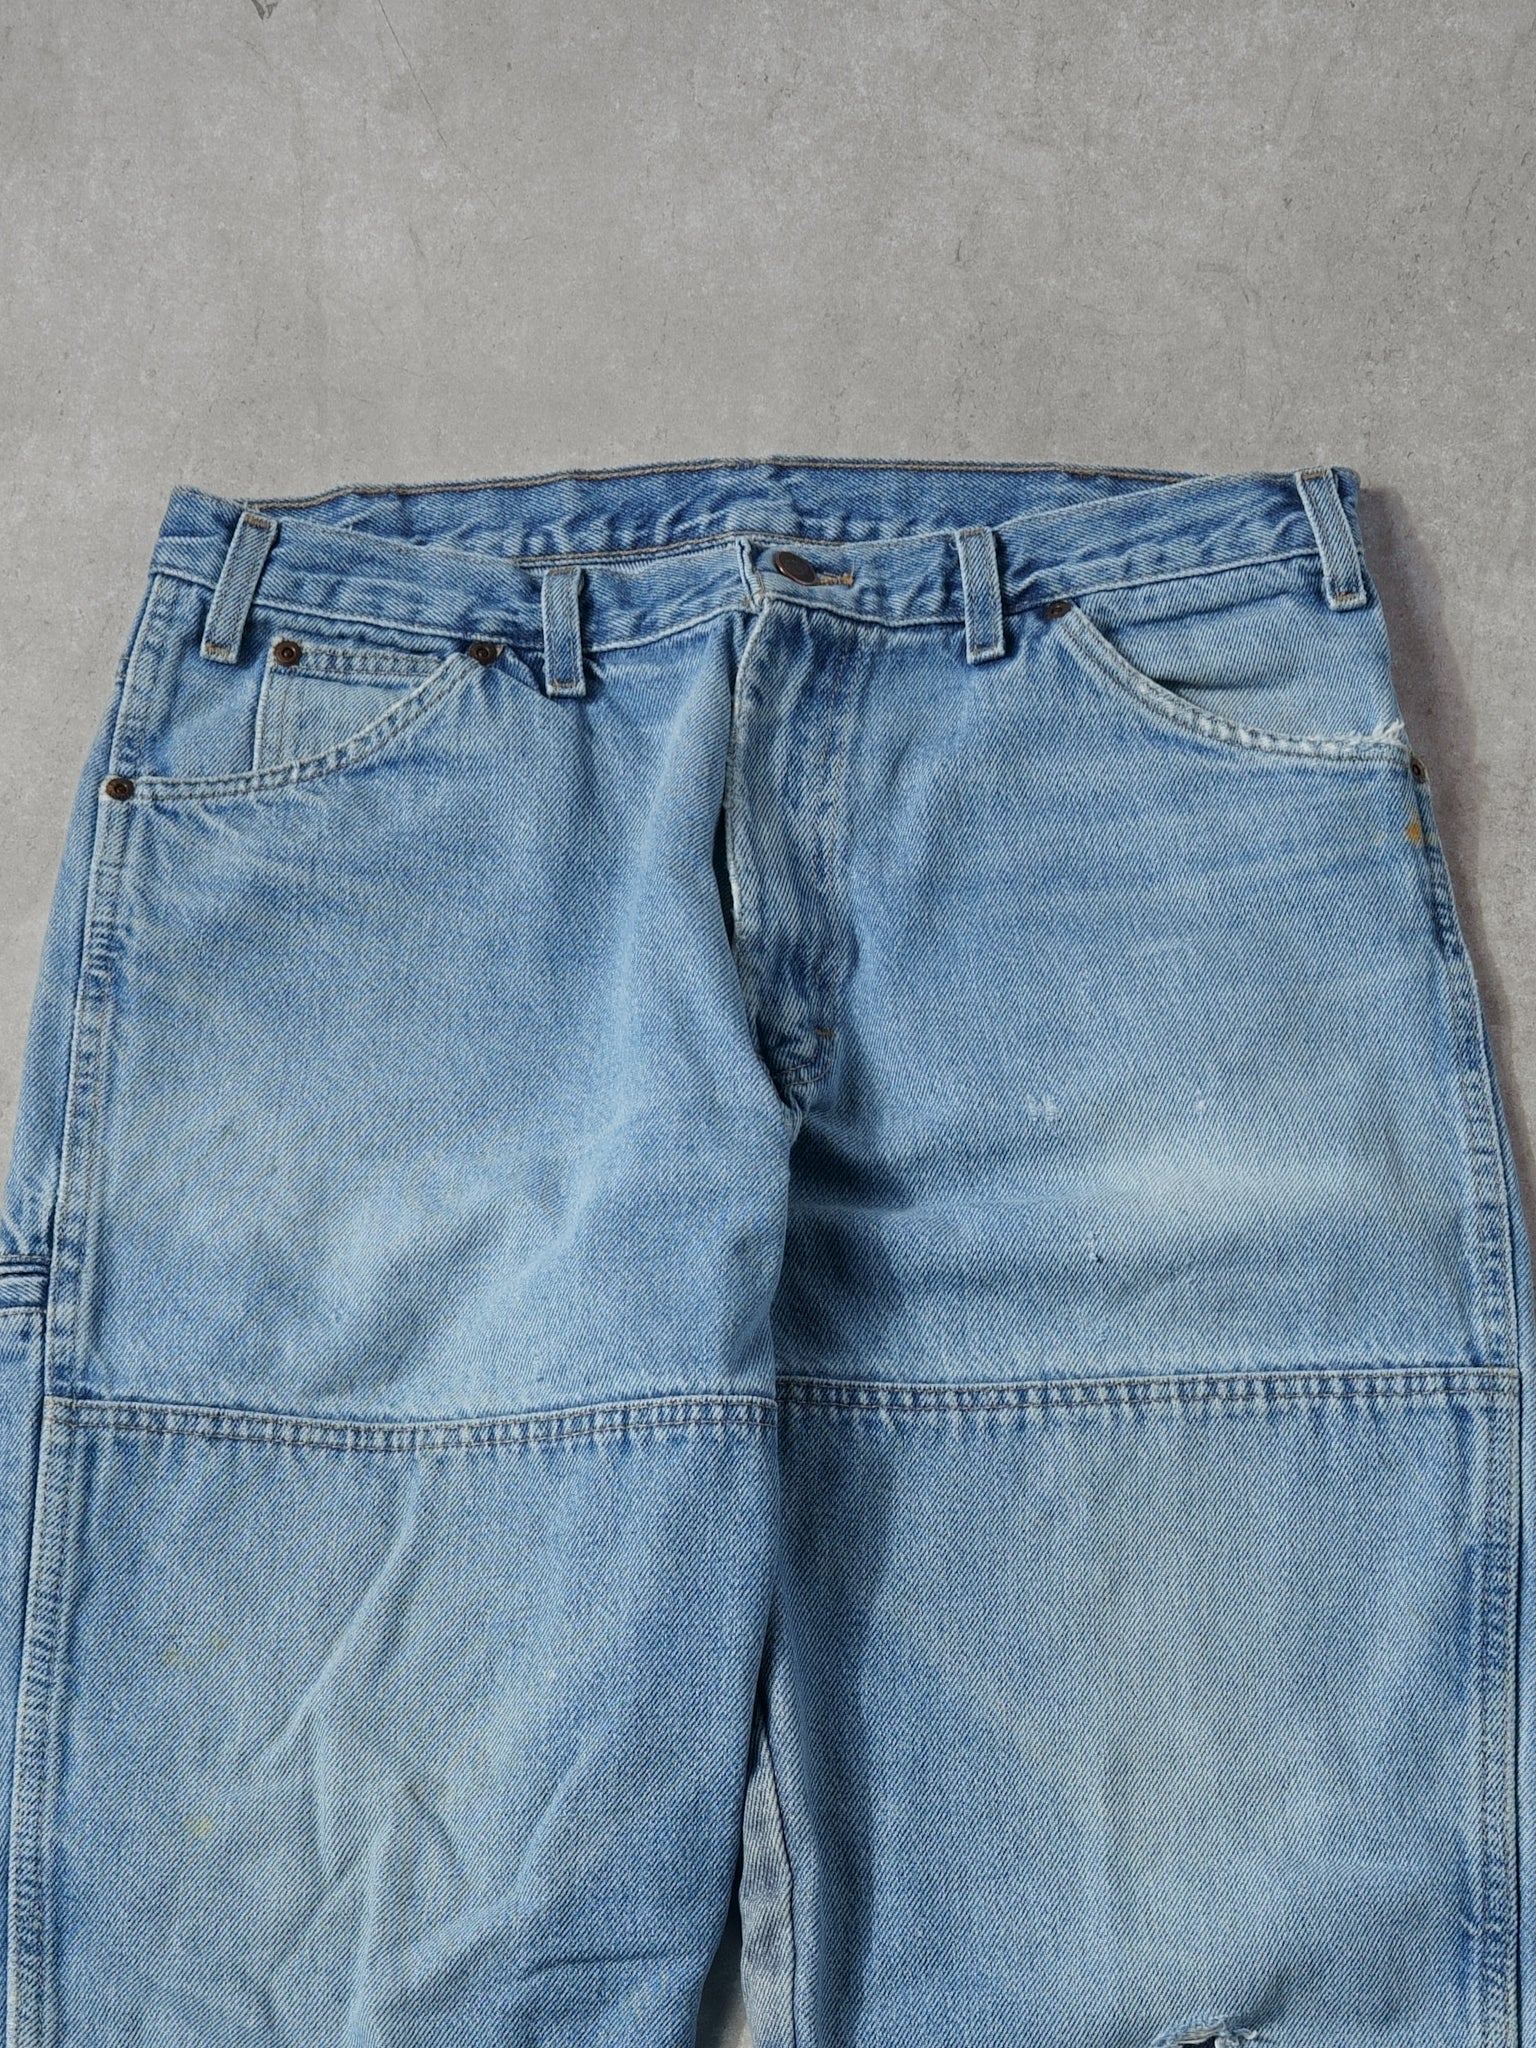 Vintage 90s Light Blue Dickies Double Knee Carpenter Denim Jeans (34x30)